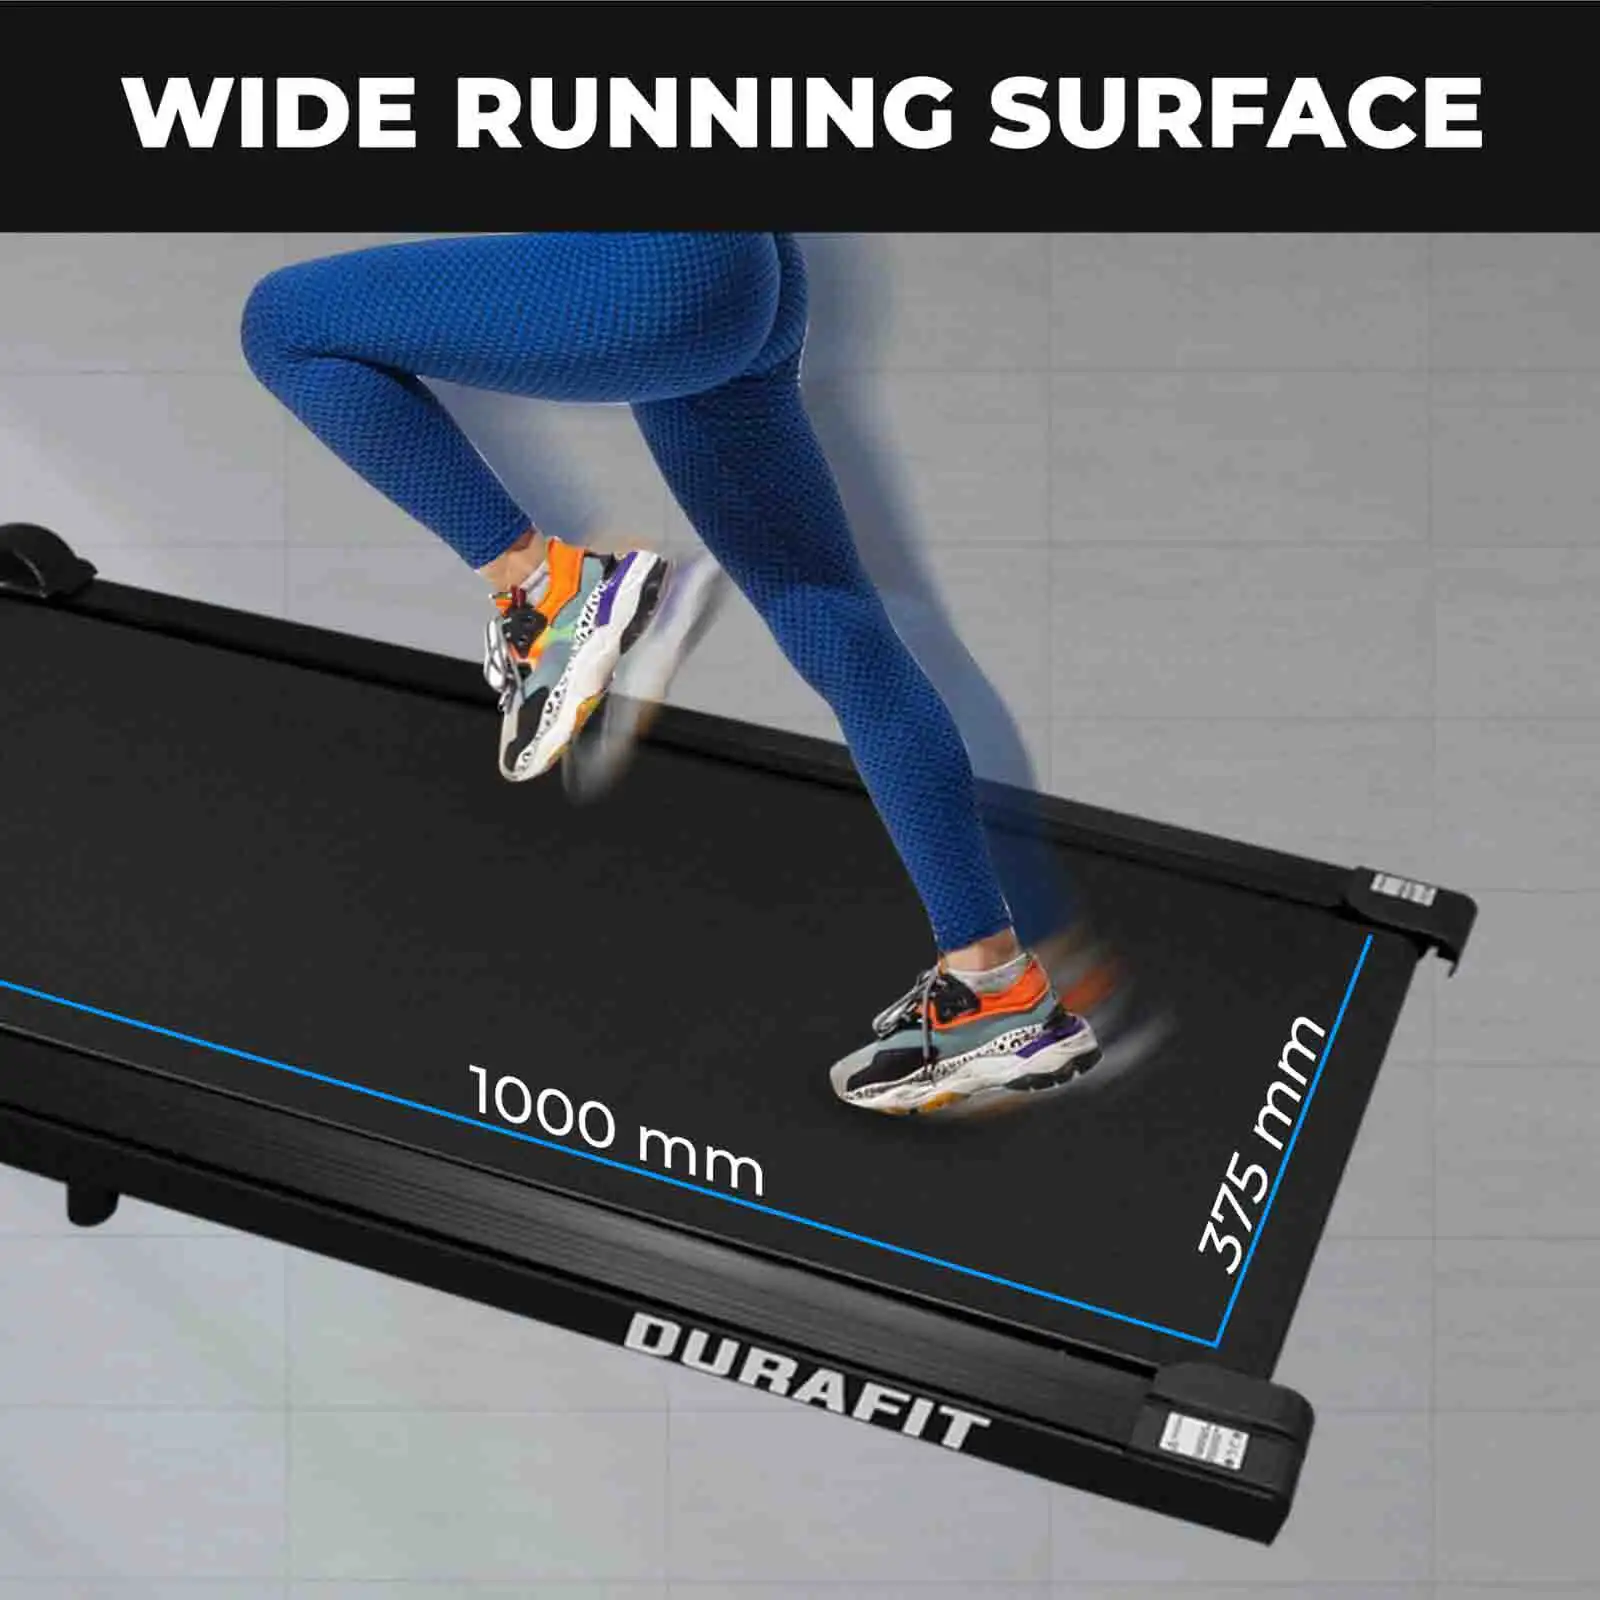 Durafit Efficio Black Treadmill with wide running surface